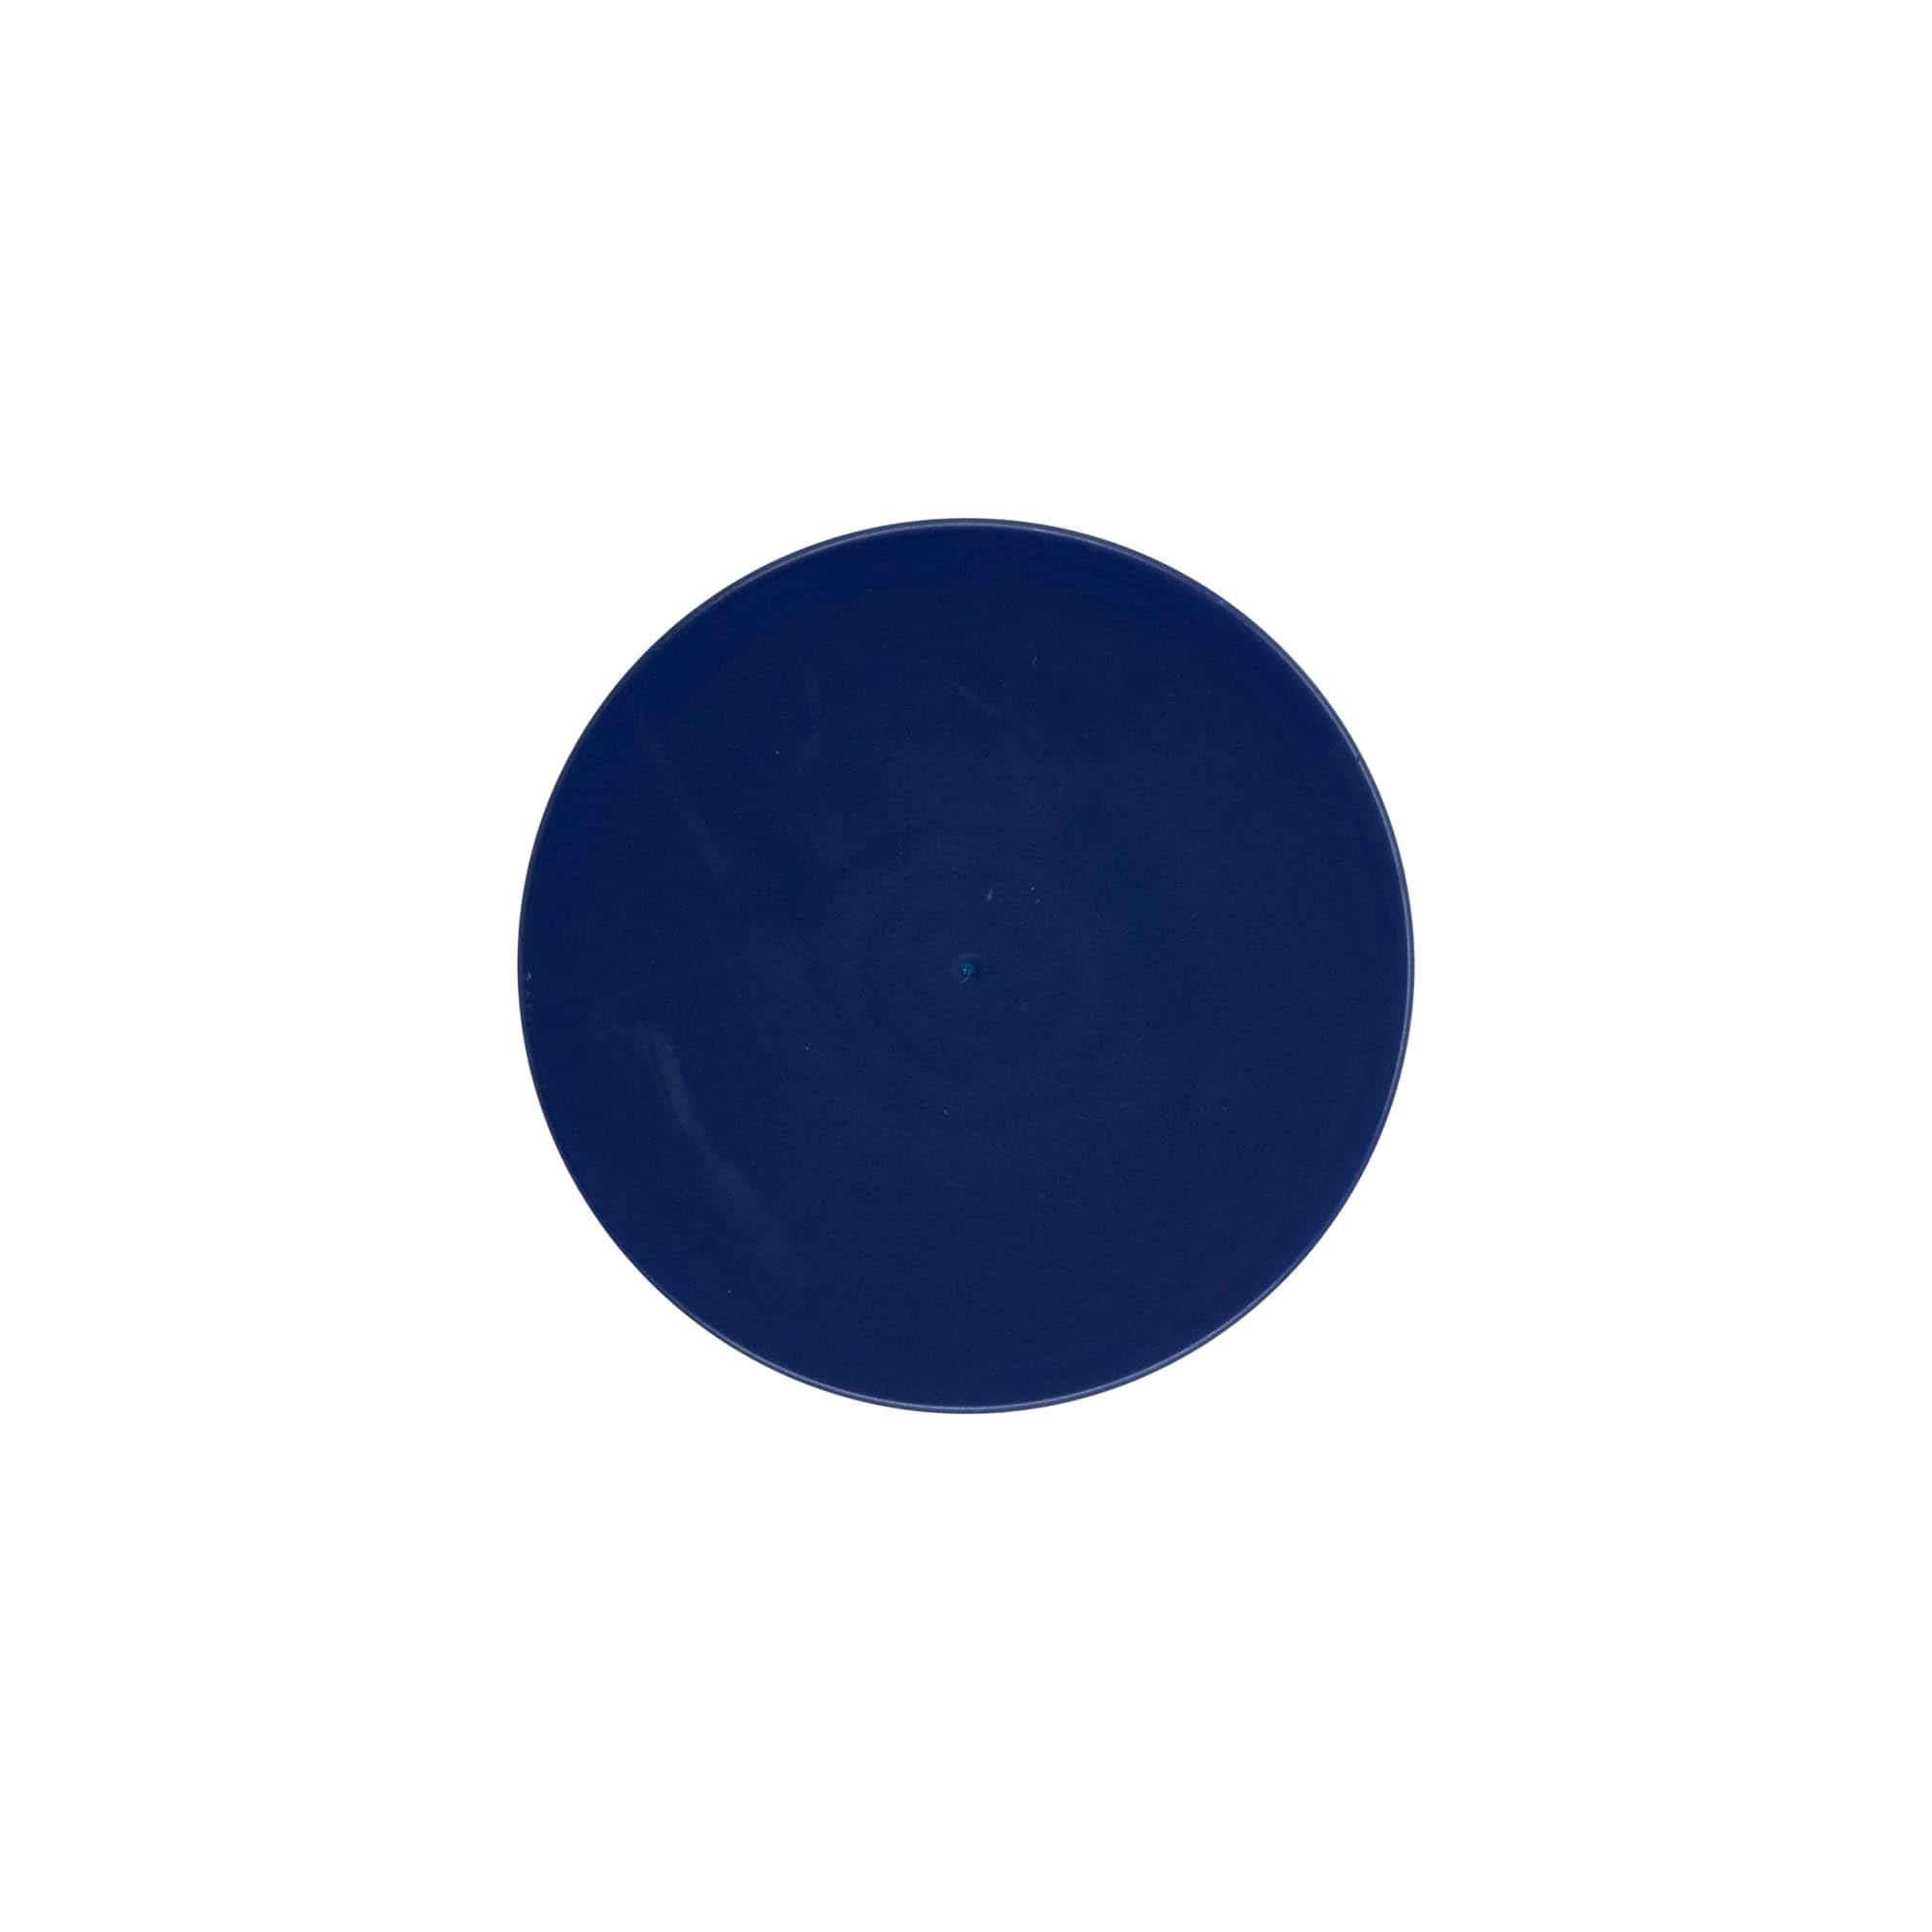 Slip lid for standard ceramic pot, HDPE plastic, blue